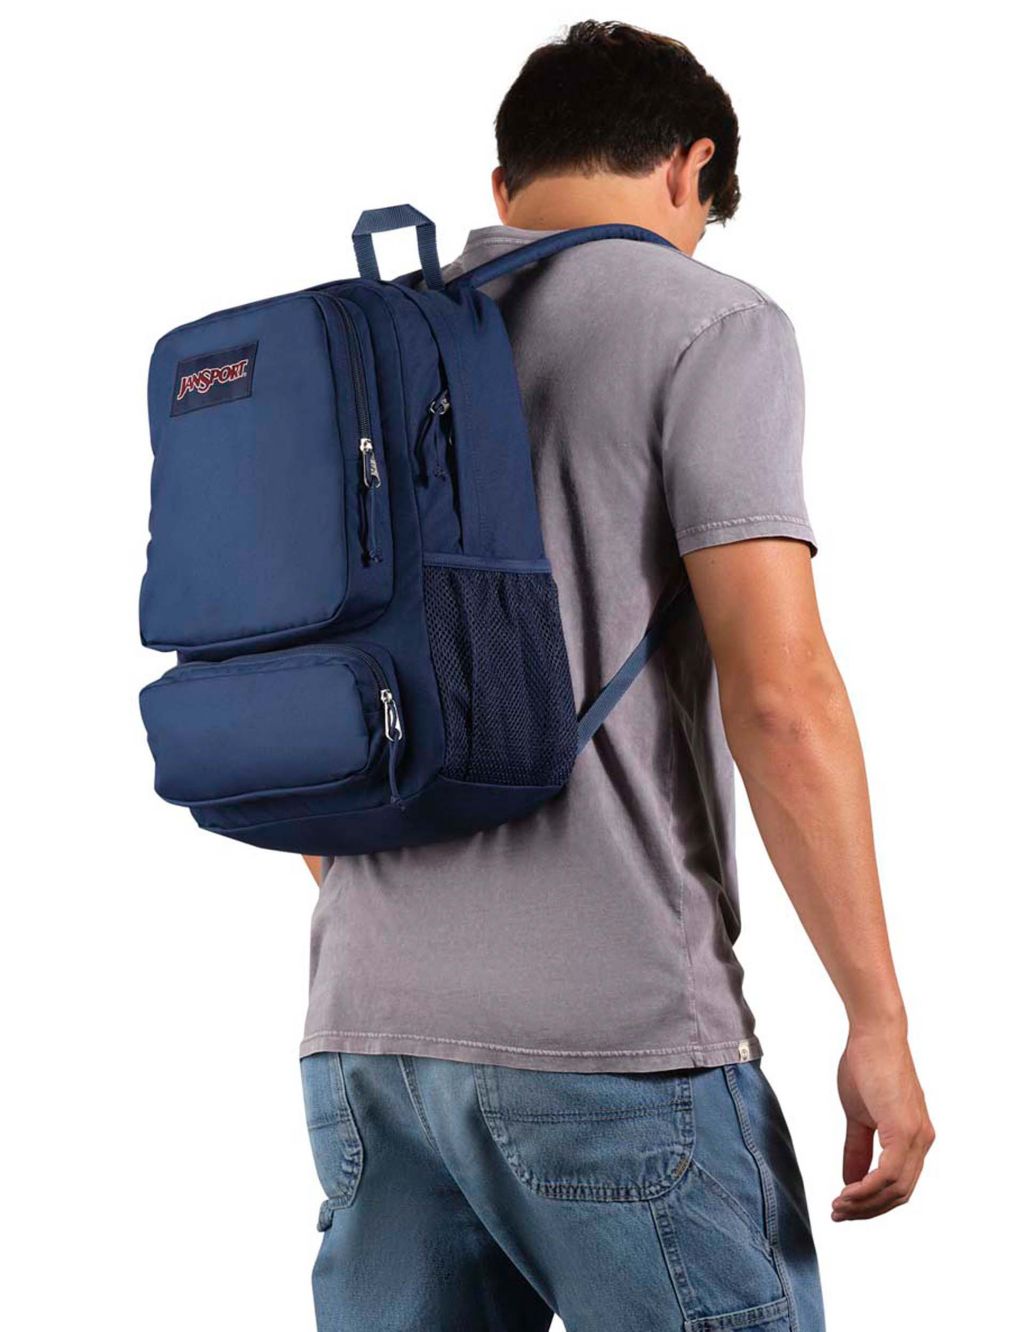 Doubleton Multi Pocket Backpack image 8